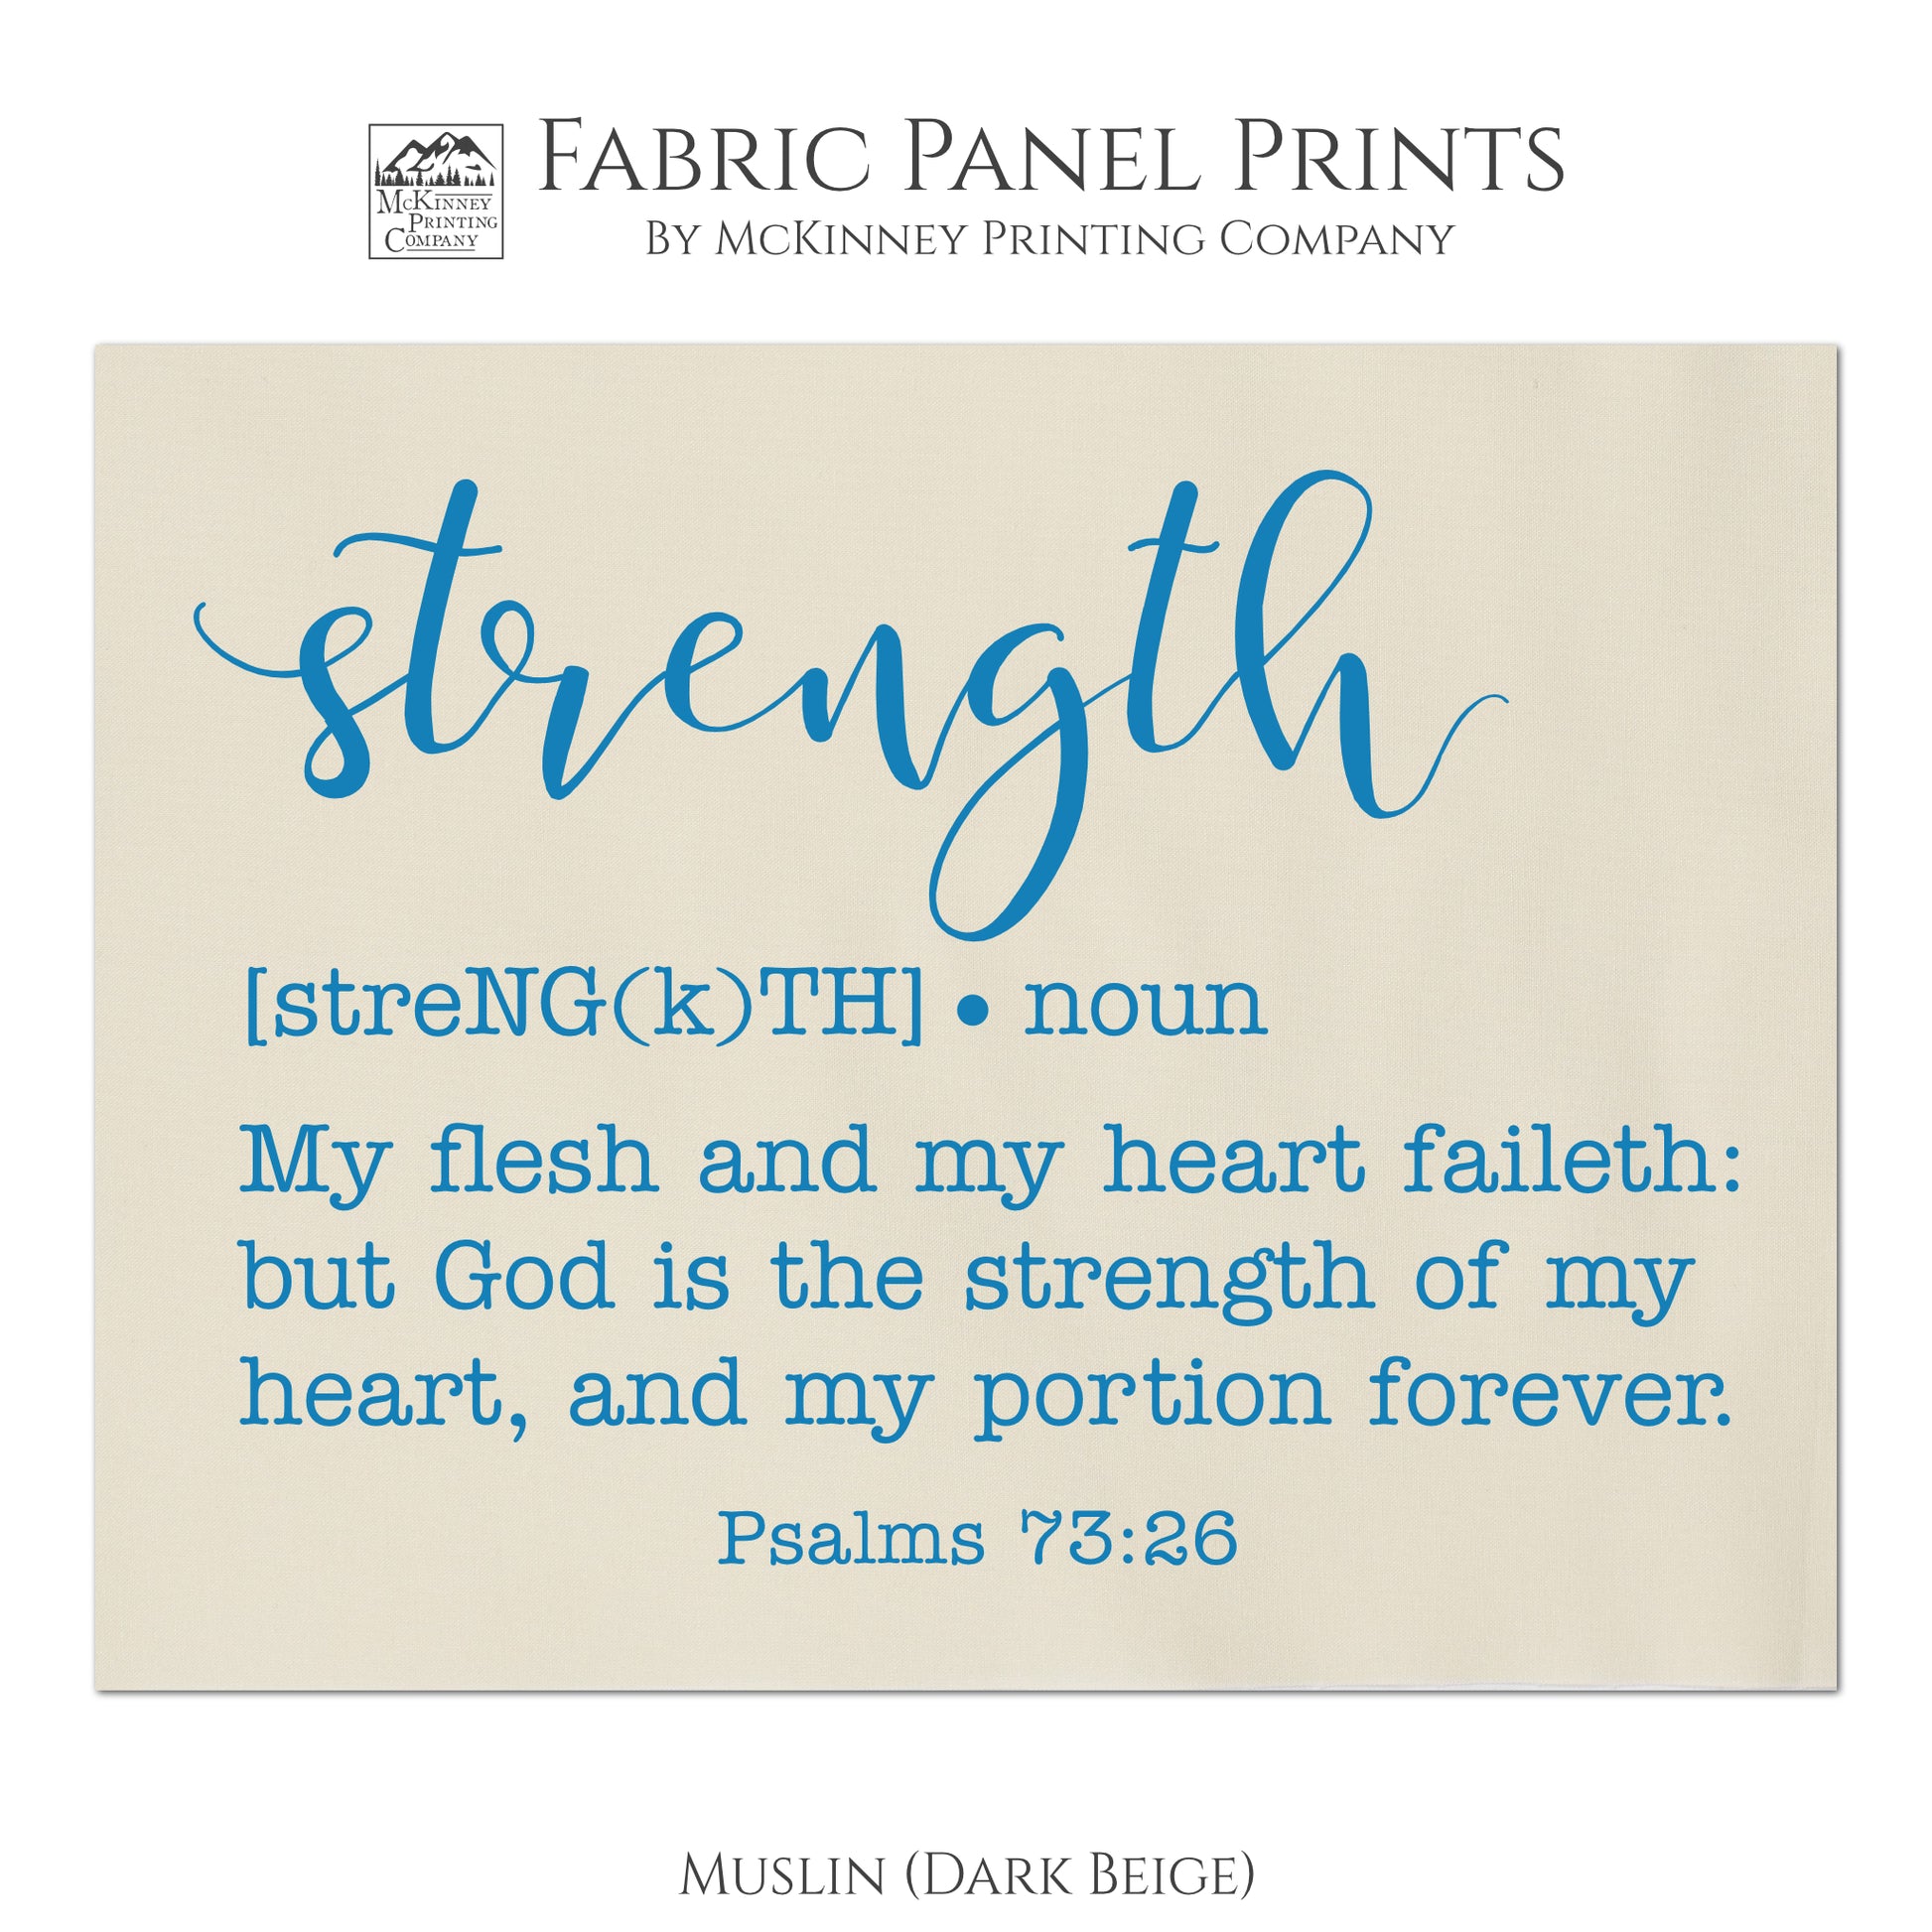 Strength - My Flesh and my heart faileth: but God is the strength of my heart, and my portion forever. Psalms 73:26 - Fabric Panel Print - Muslin